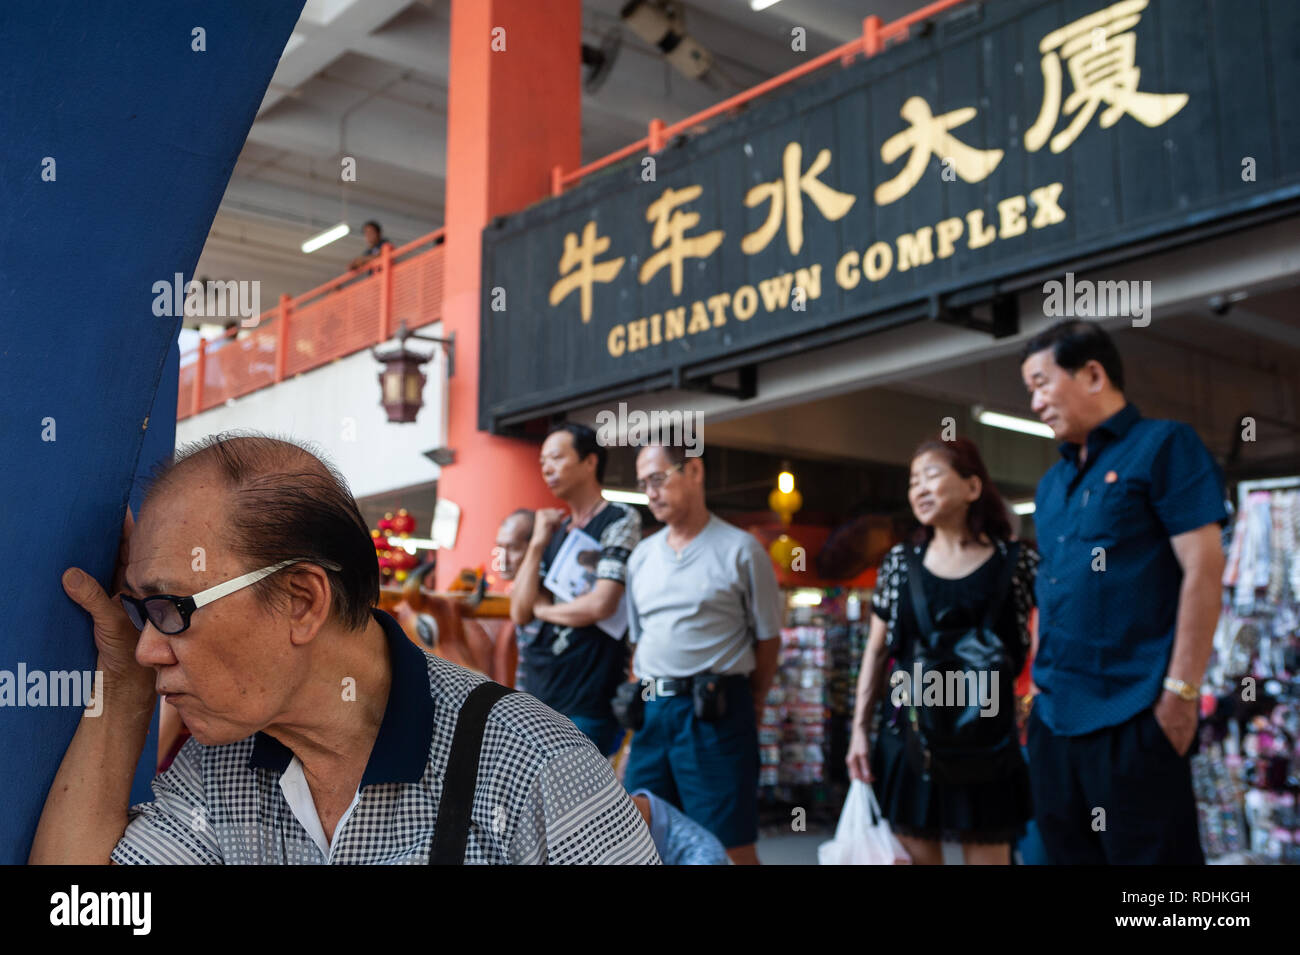 06.01.2018, Singapur, Republik Singapur, Asien - ältere Männer vor dem Chinatown auf Kreta Ayer Square Komplex erfüllen. Stockfoto